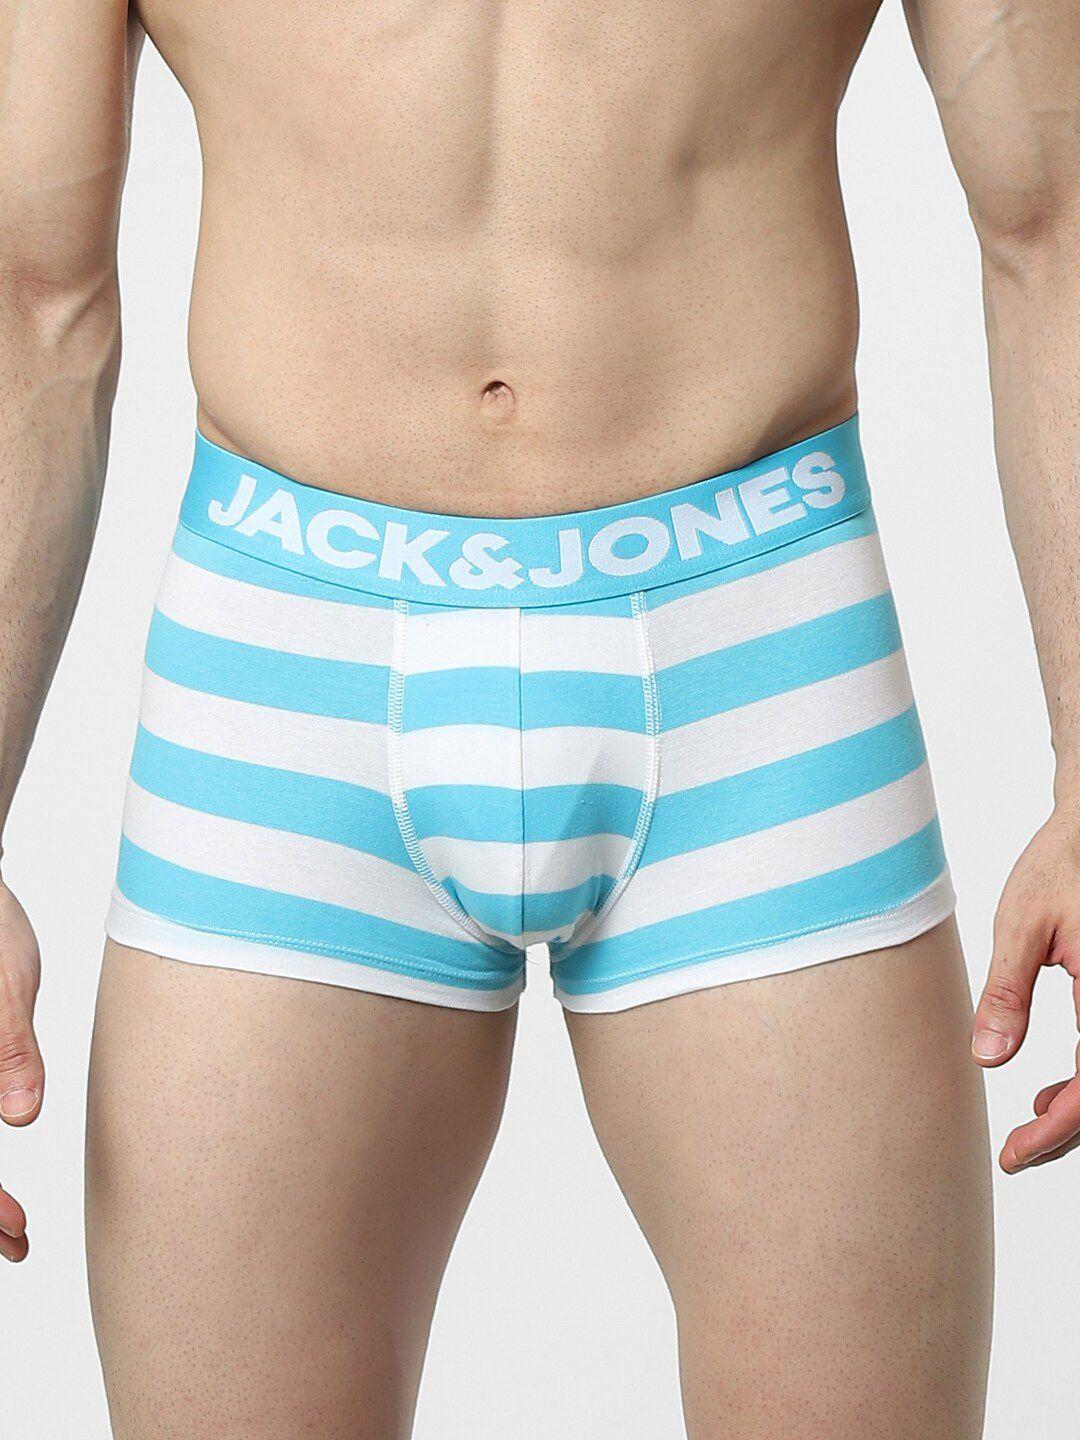 jack & jones men blue & white striped cotton trunk 1537379002